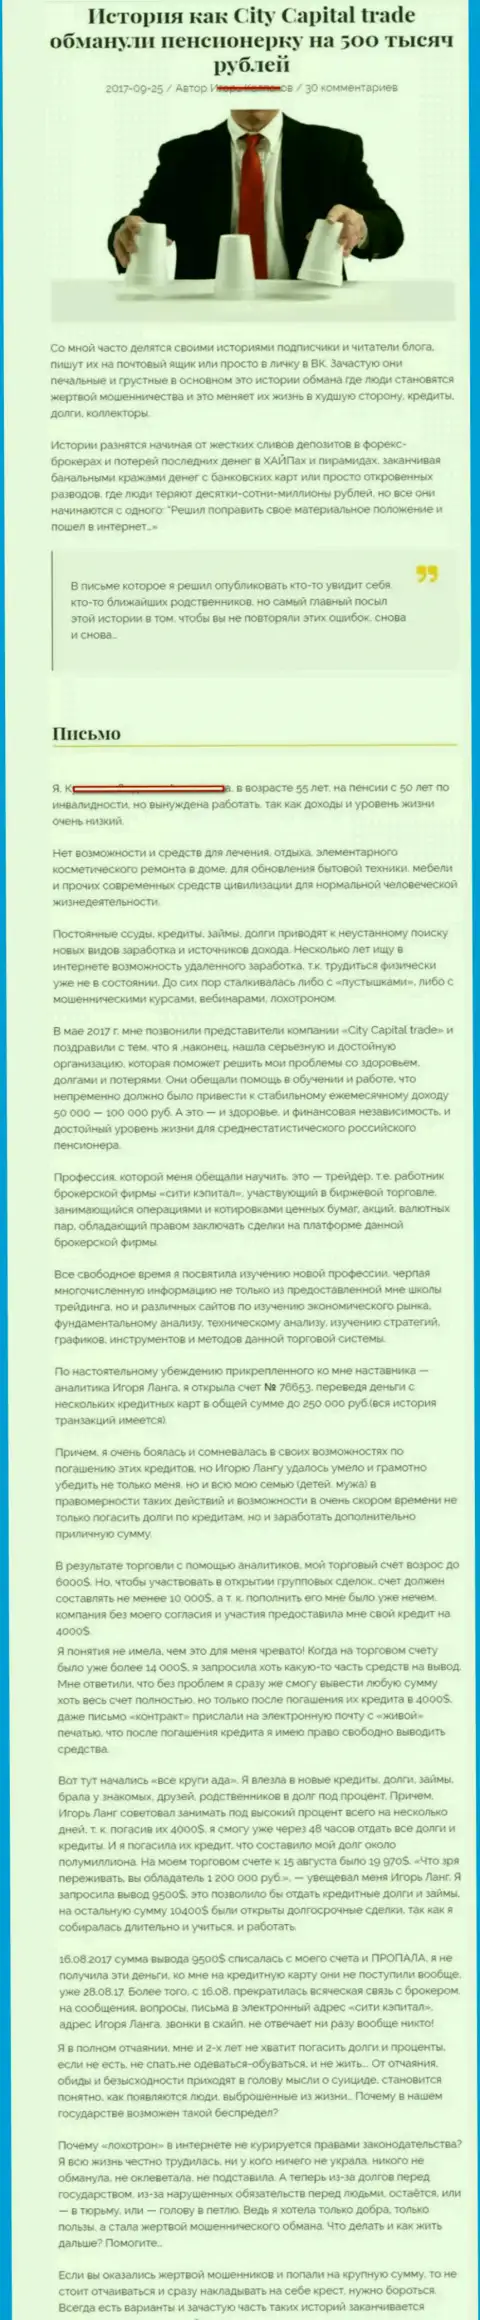 СитиКапитал Трейд надули клиентку пенсионного возраста - инвалида на сумму 500 тысяч рублей - РАЗВОДИЛЫ !!!